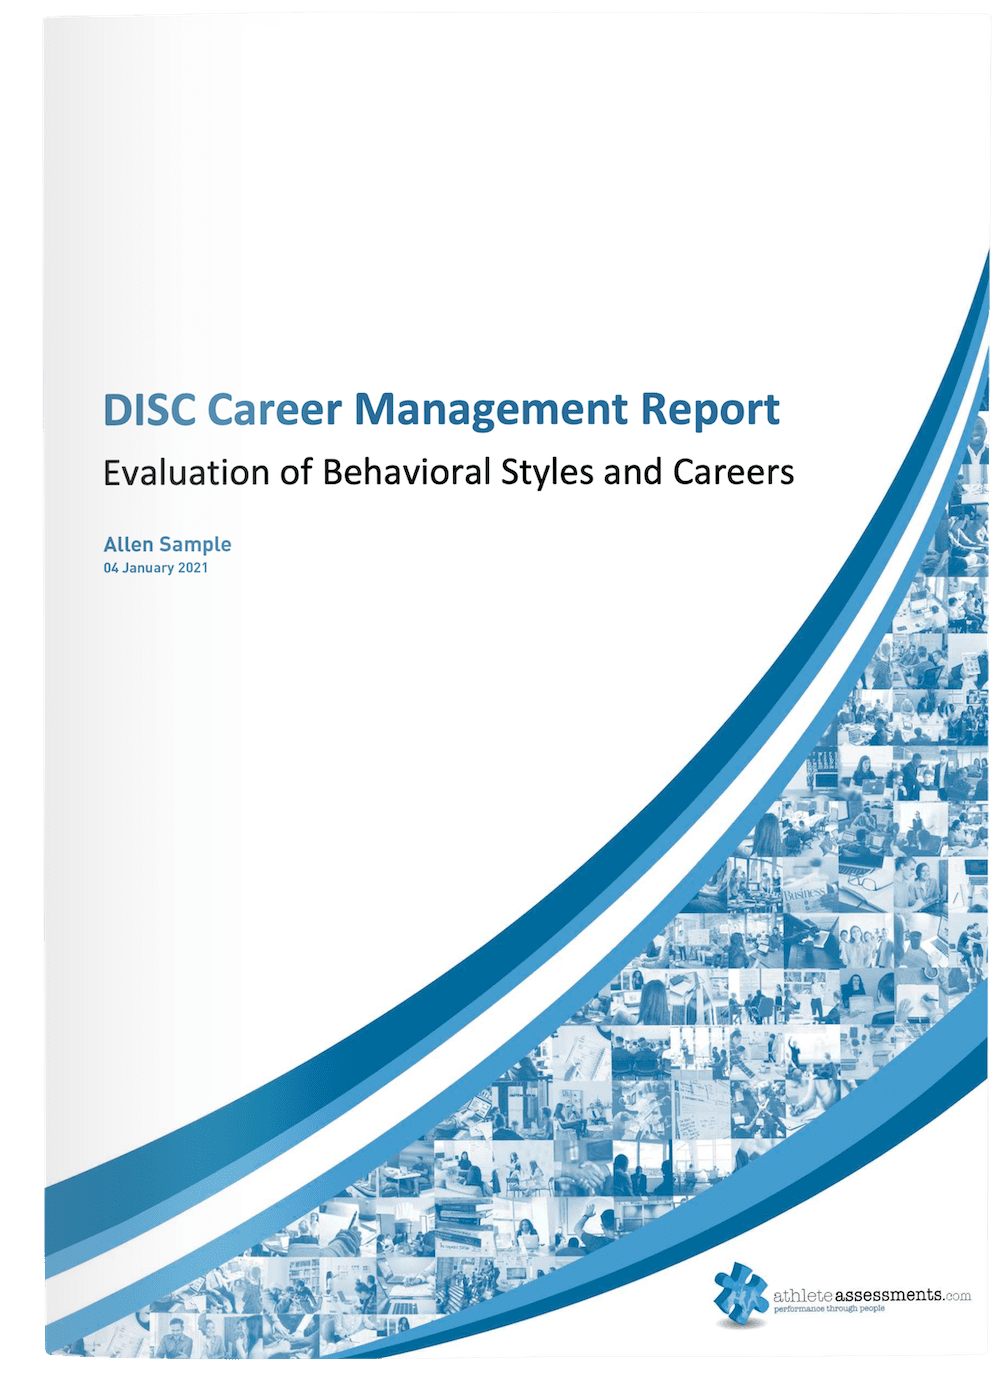 DISC Career Management Report